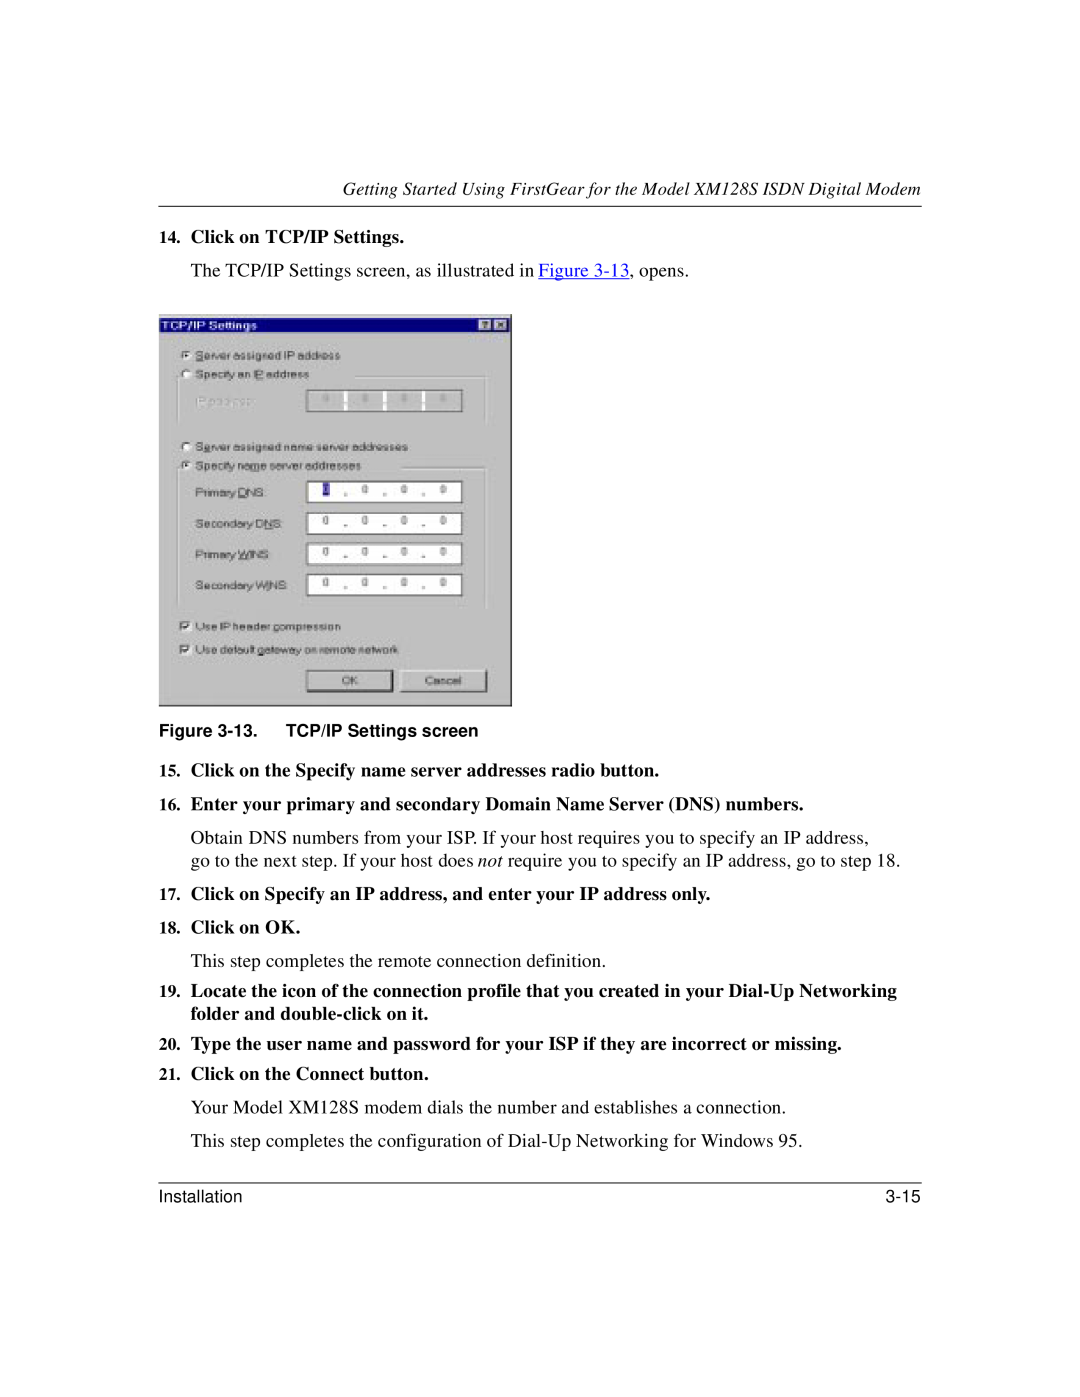 NETGEAR XM128S manual Click on TCP/IP Settings 